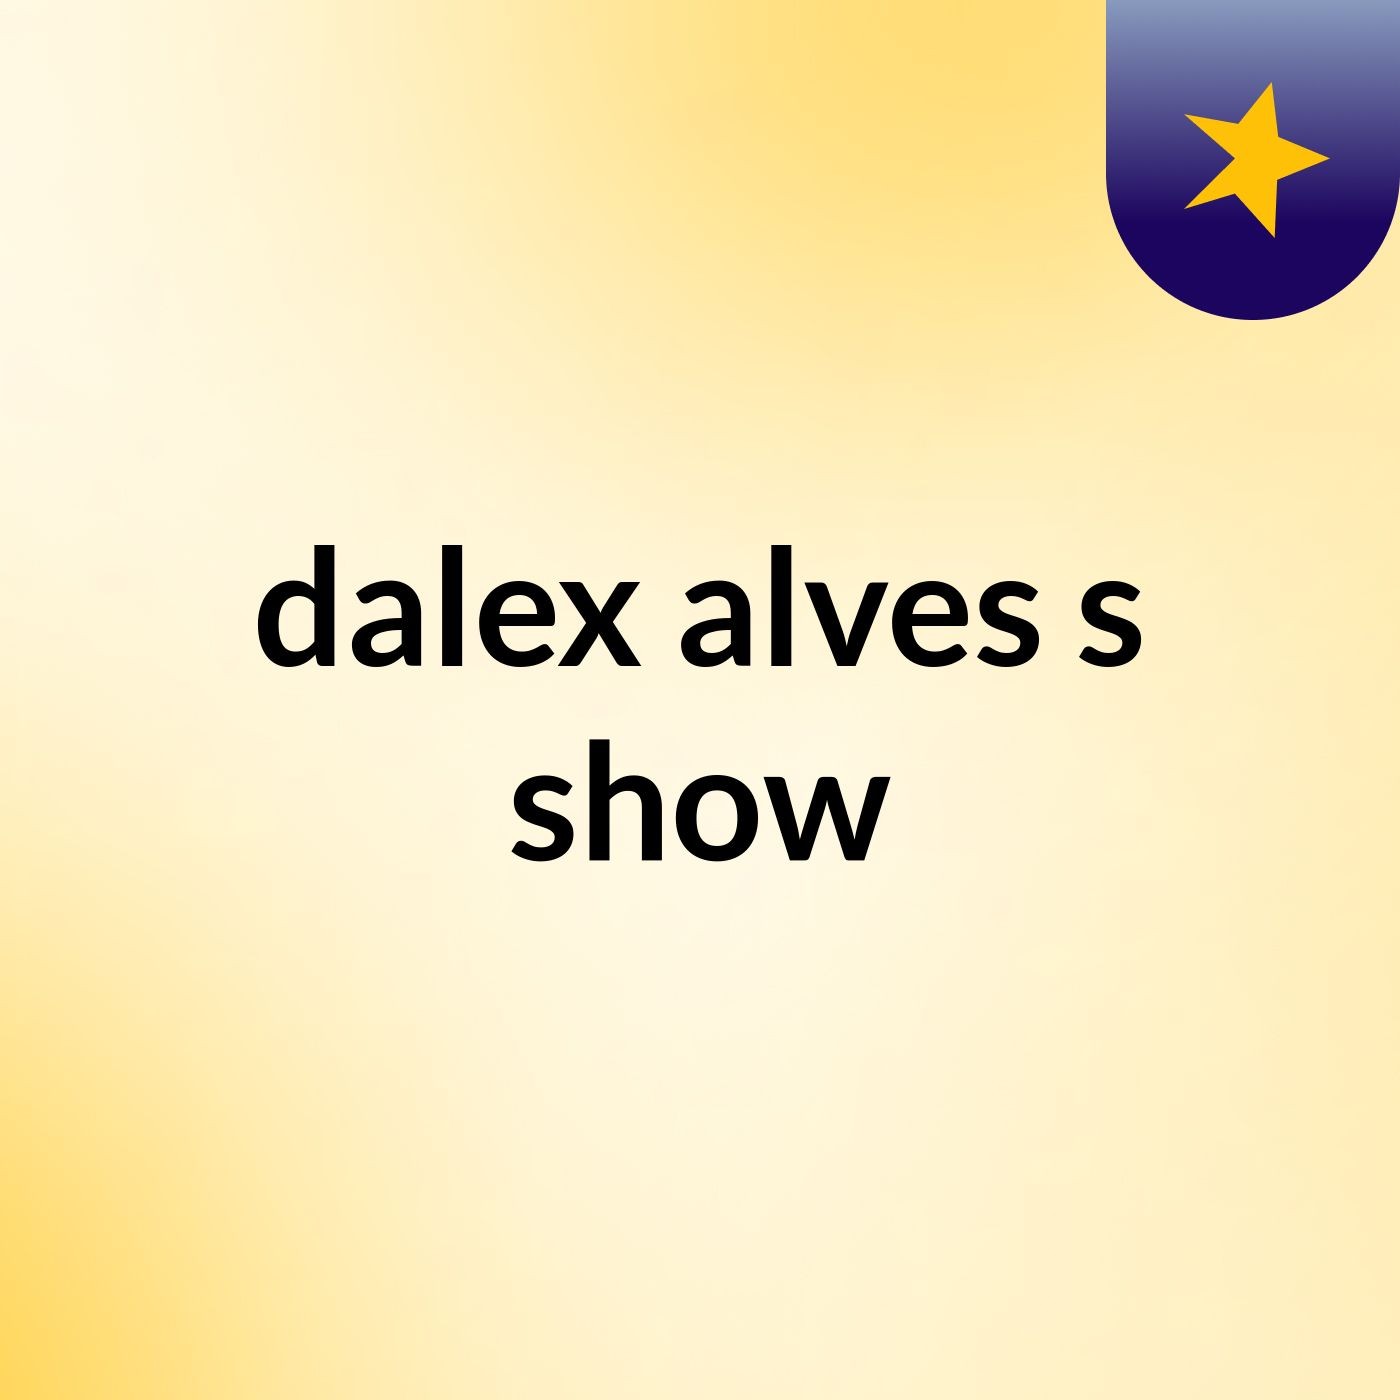 dalex alves's show